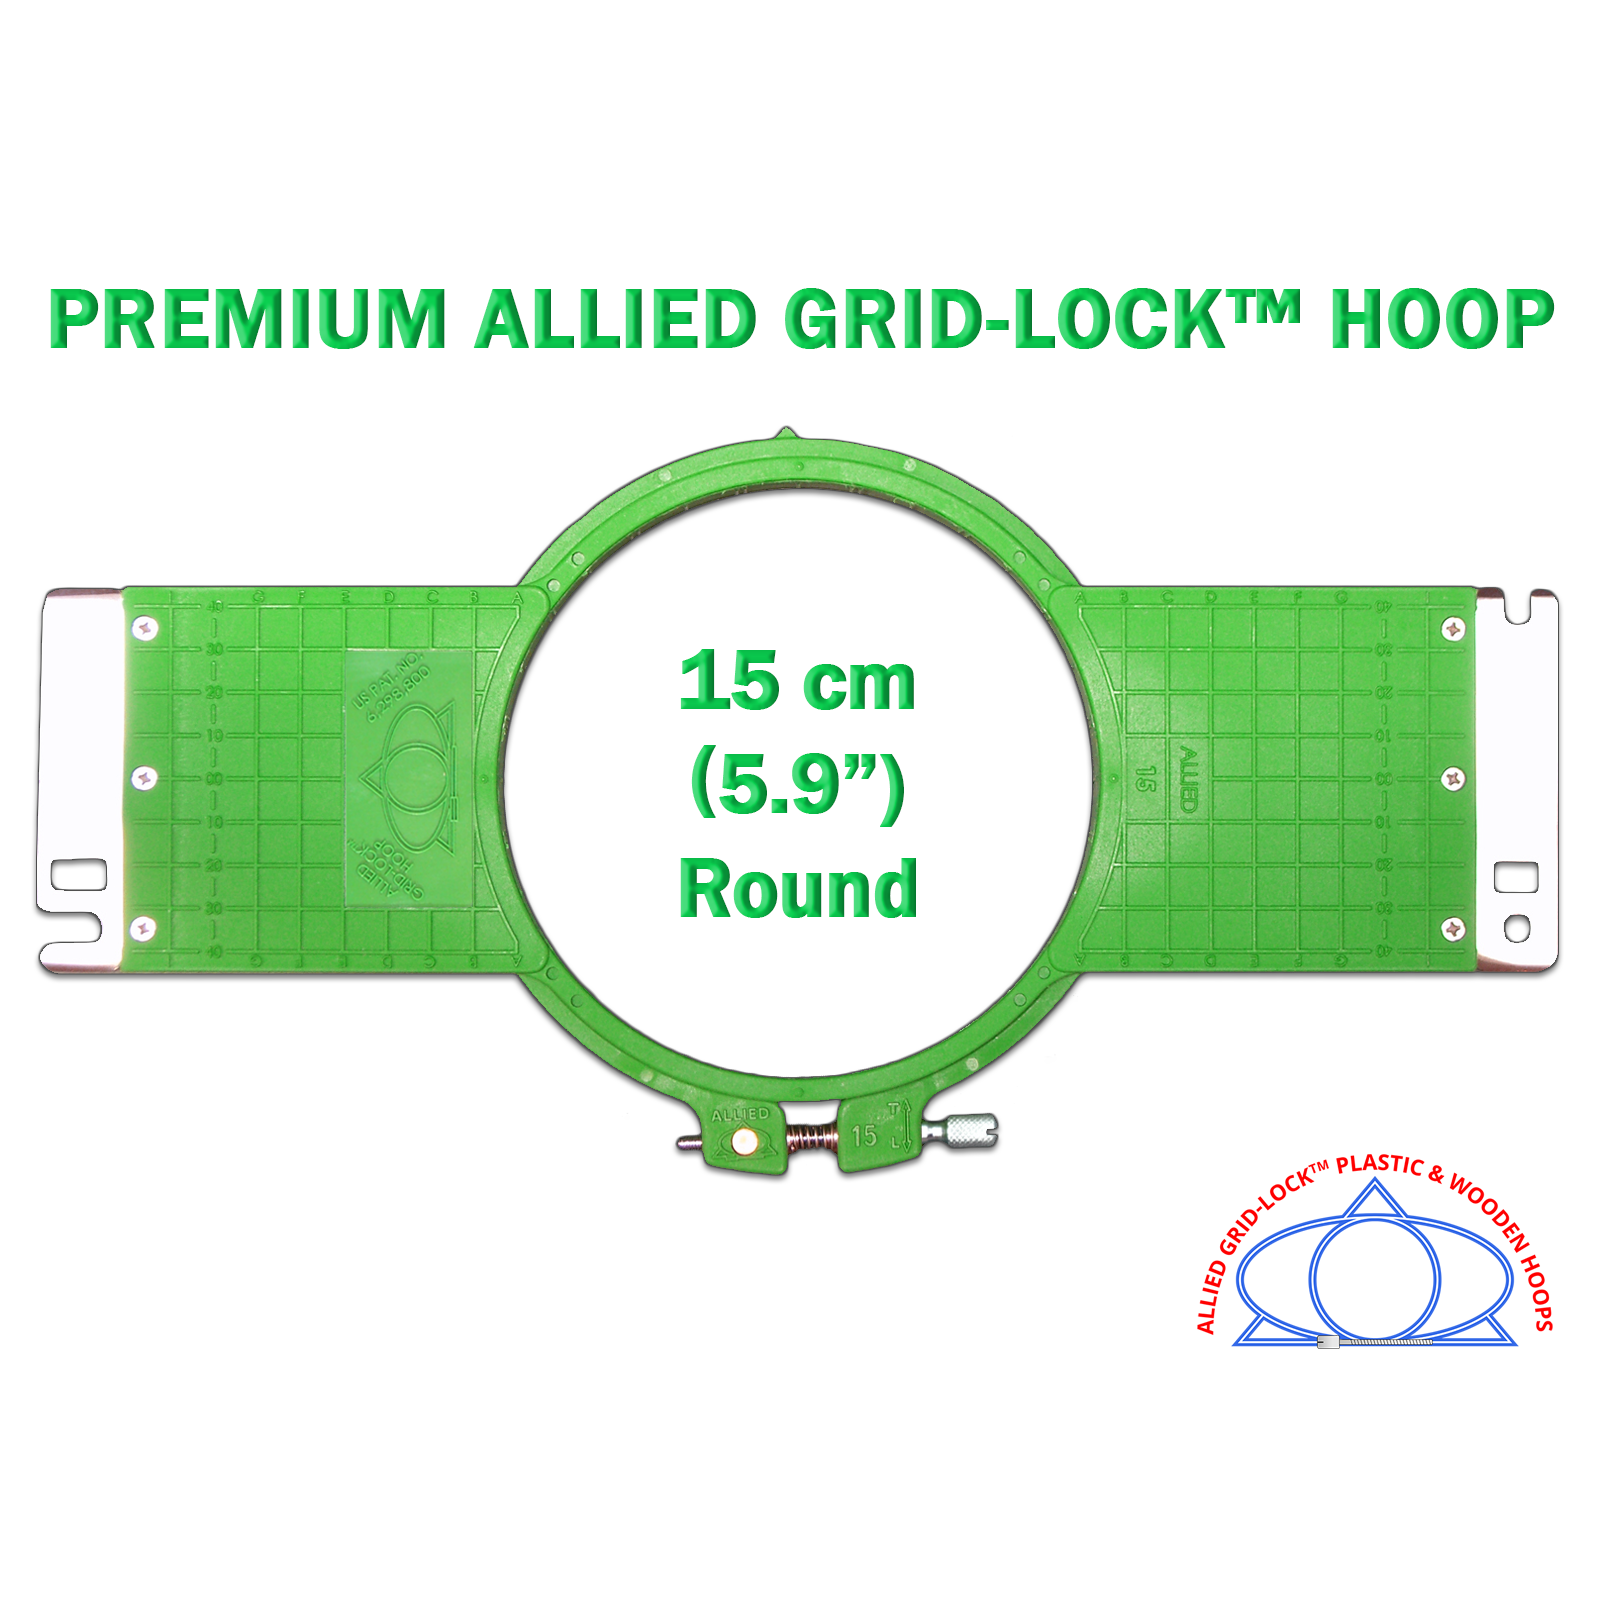 Allied Gridlock Hoop for Avance 5.9" Round